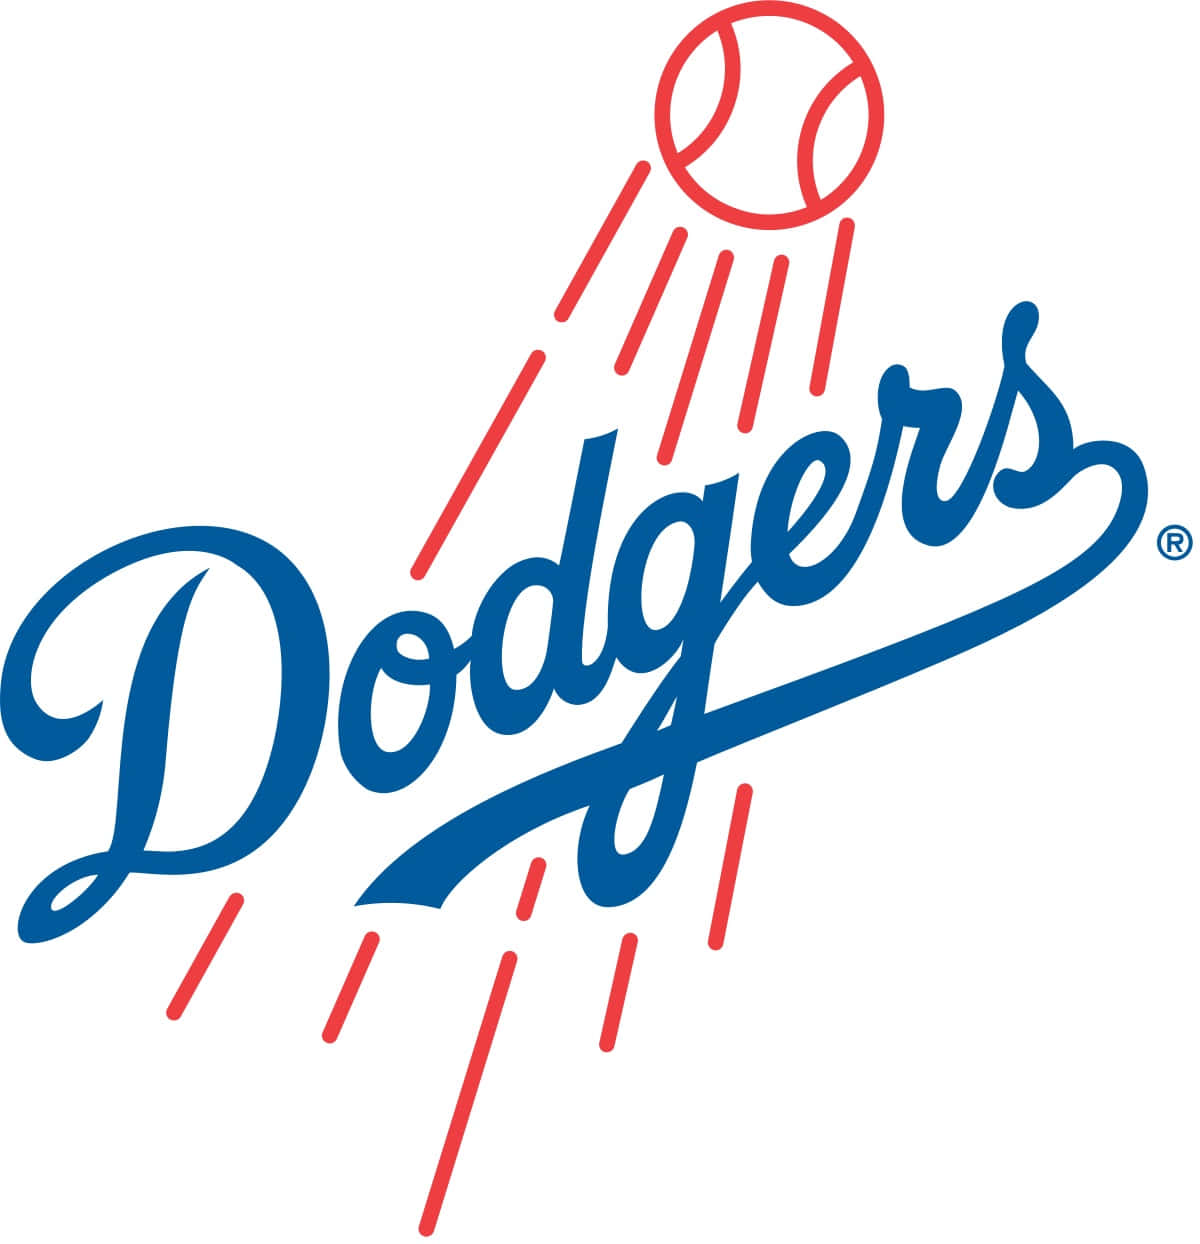 Los Angeles Dodgers: Spirit of Triumph